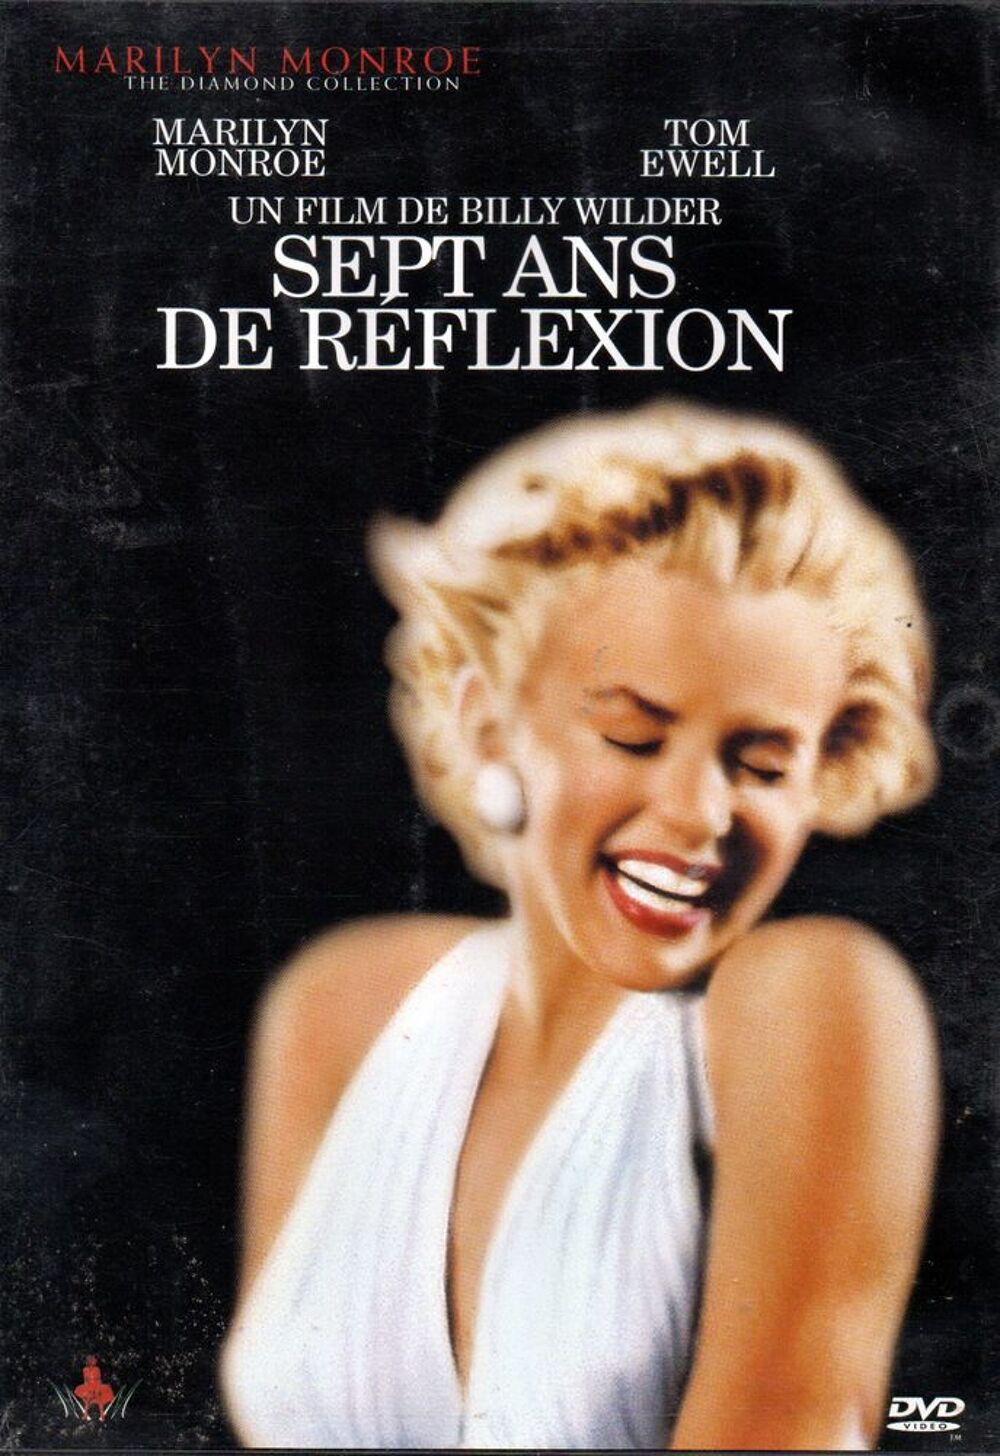 sept ans de reflexion (Marilyn MONROE) DVD et blu-ray